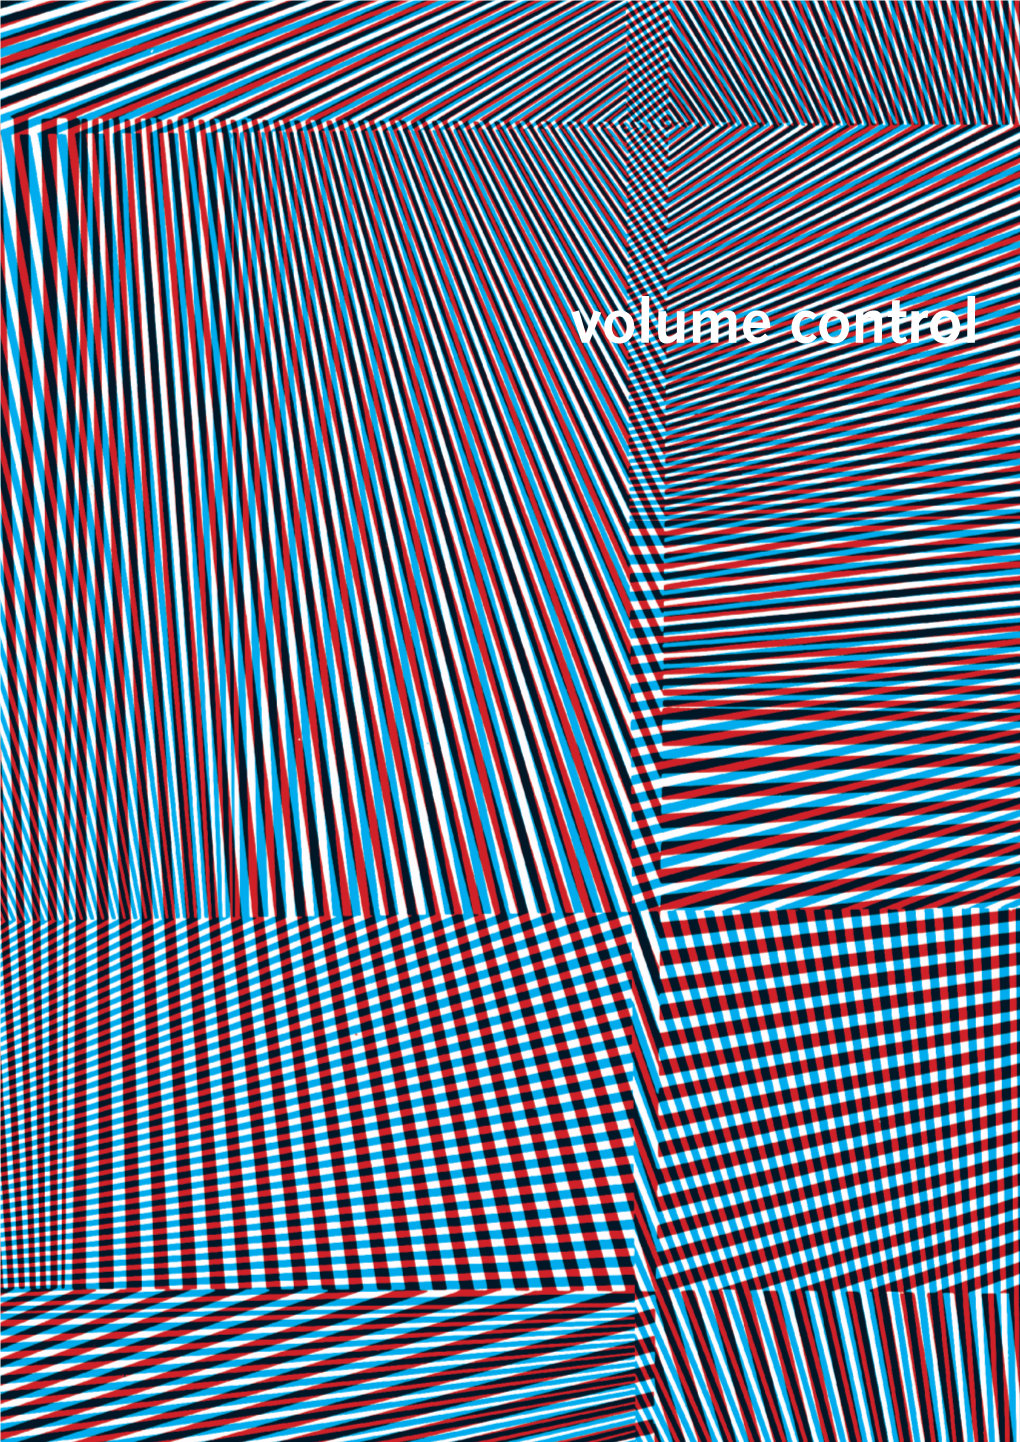 Volume Control Monash Art Design & Mondays 6 – 8Pm Architecture Speaker Series Lecture Theatre G1.04 Semester 1 2013 Volume Control Entry Is Free*